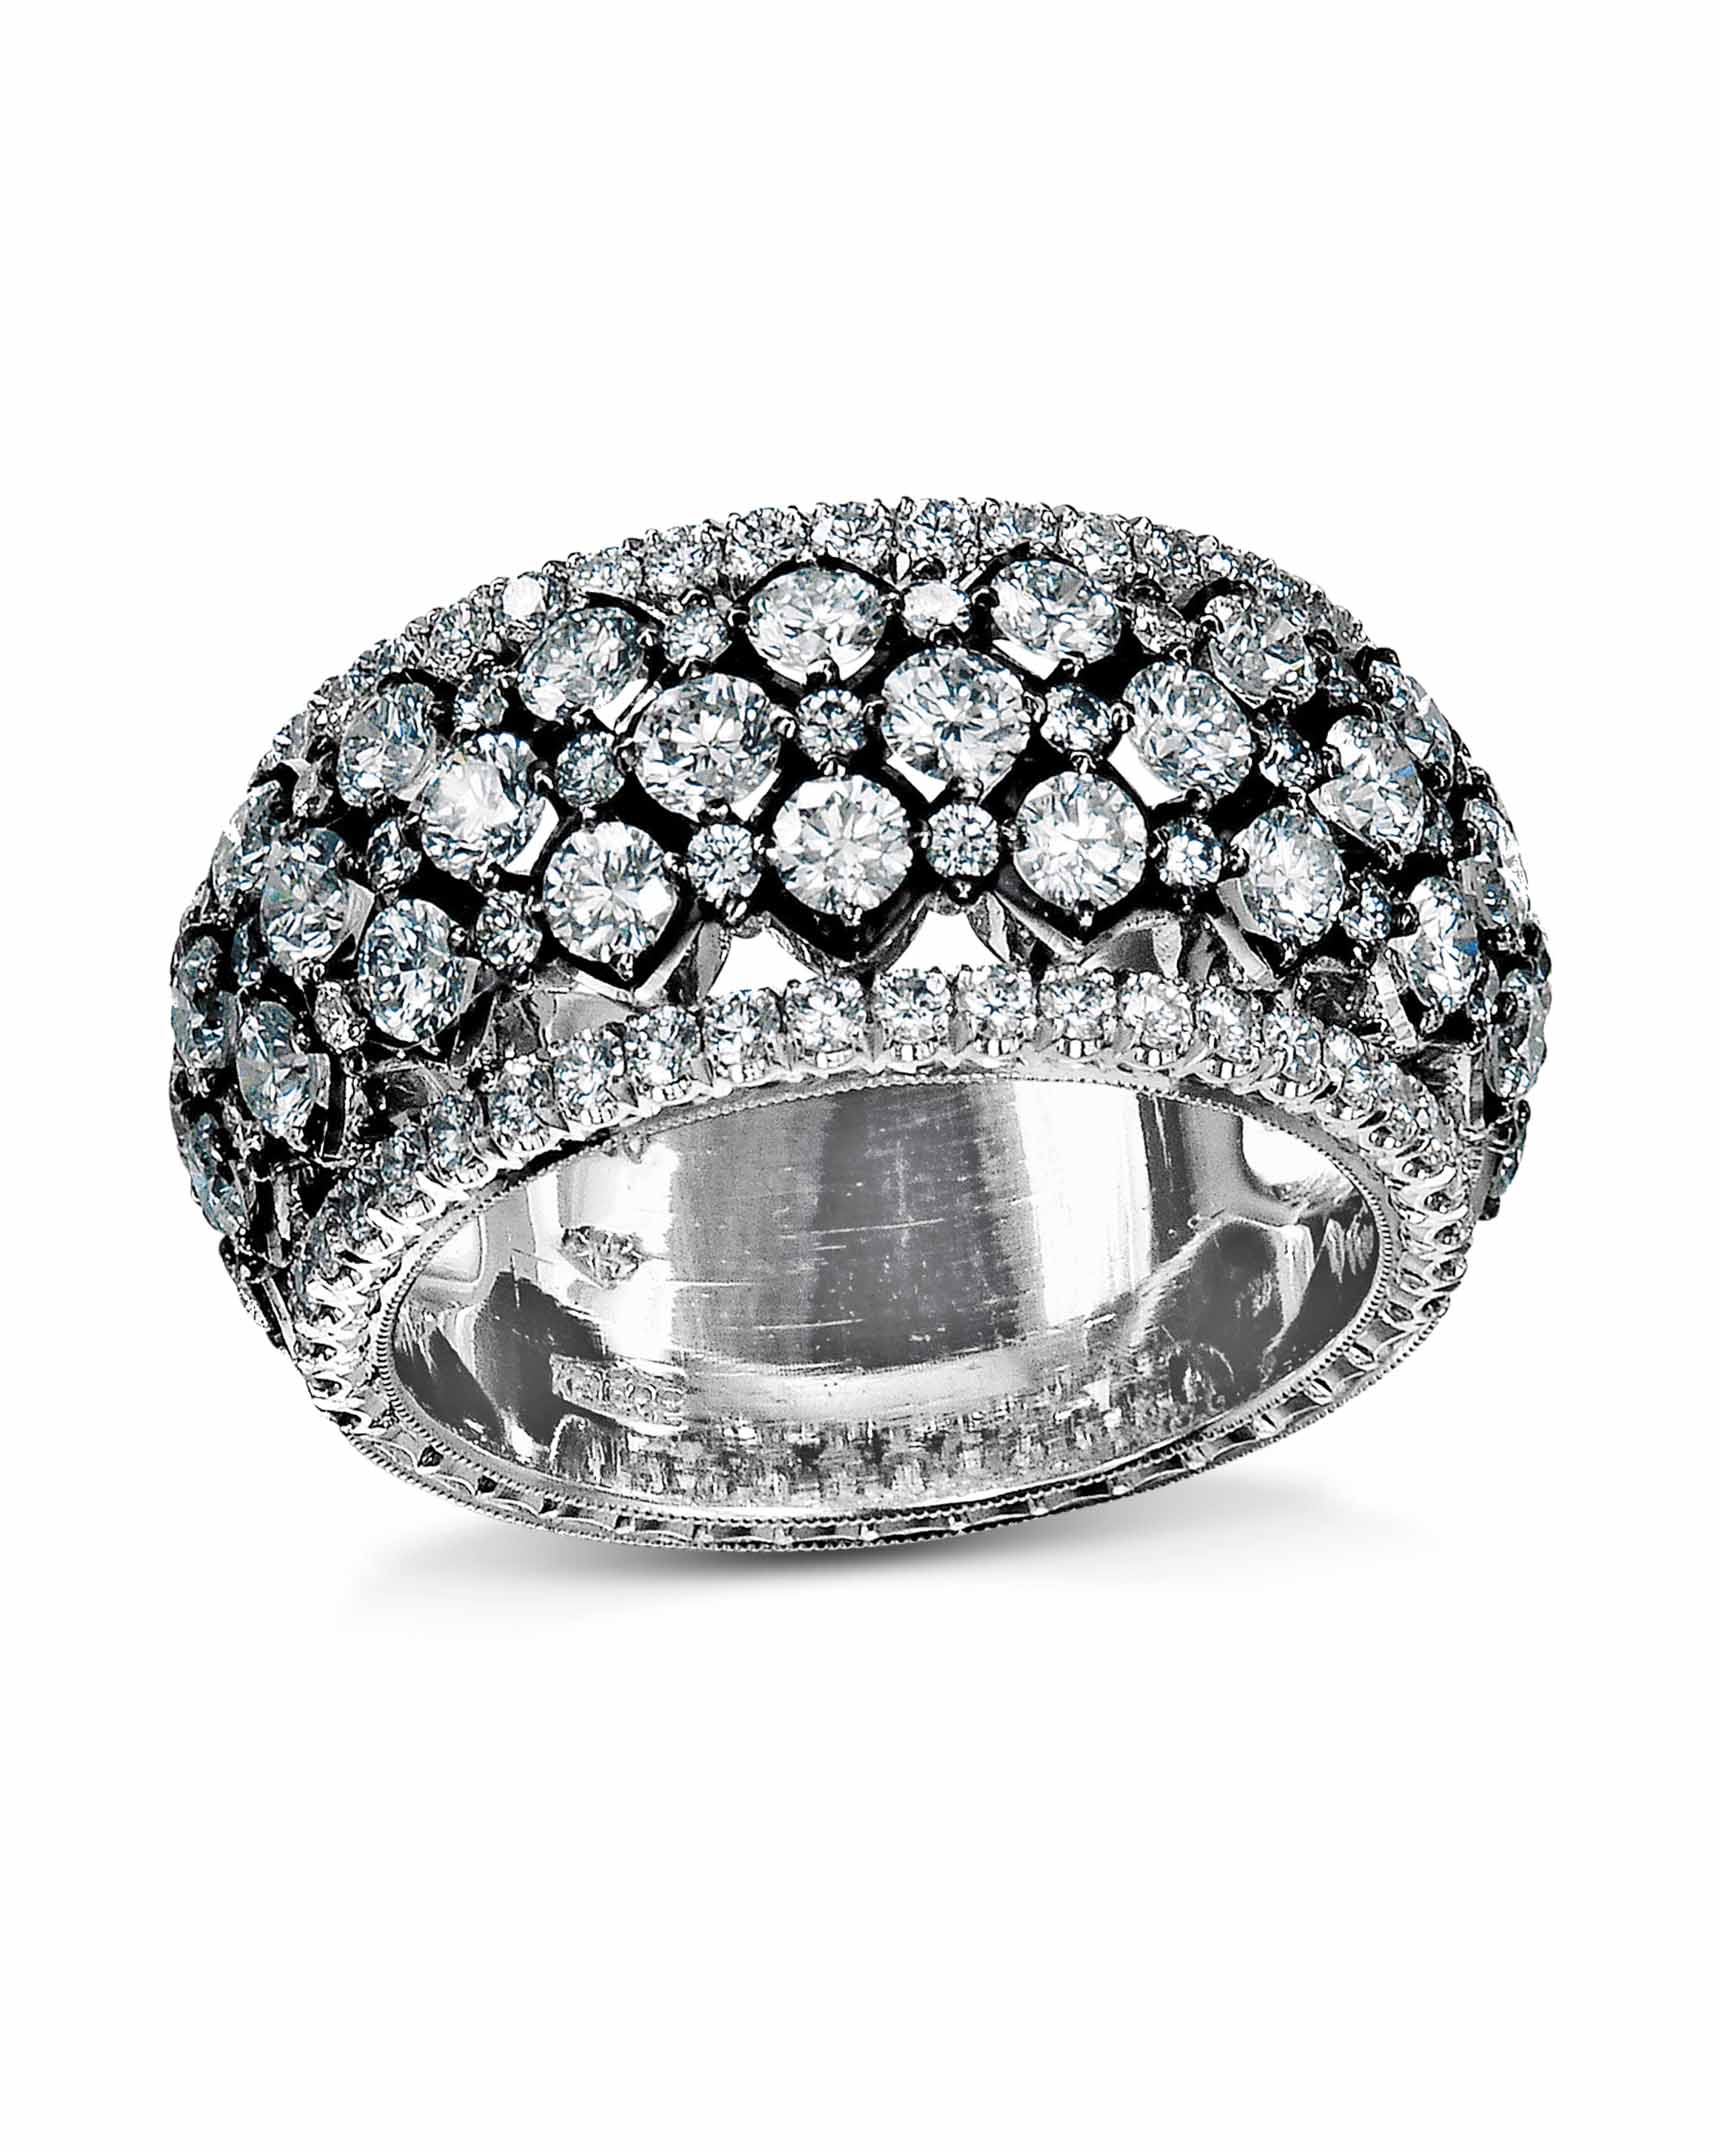 GORGEOUS Detailed Designer jack Kelege Amethyst and Diamond Halo Ring With  Free Shipping - Etsy